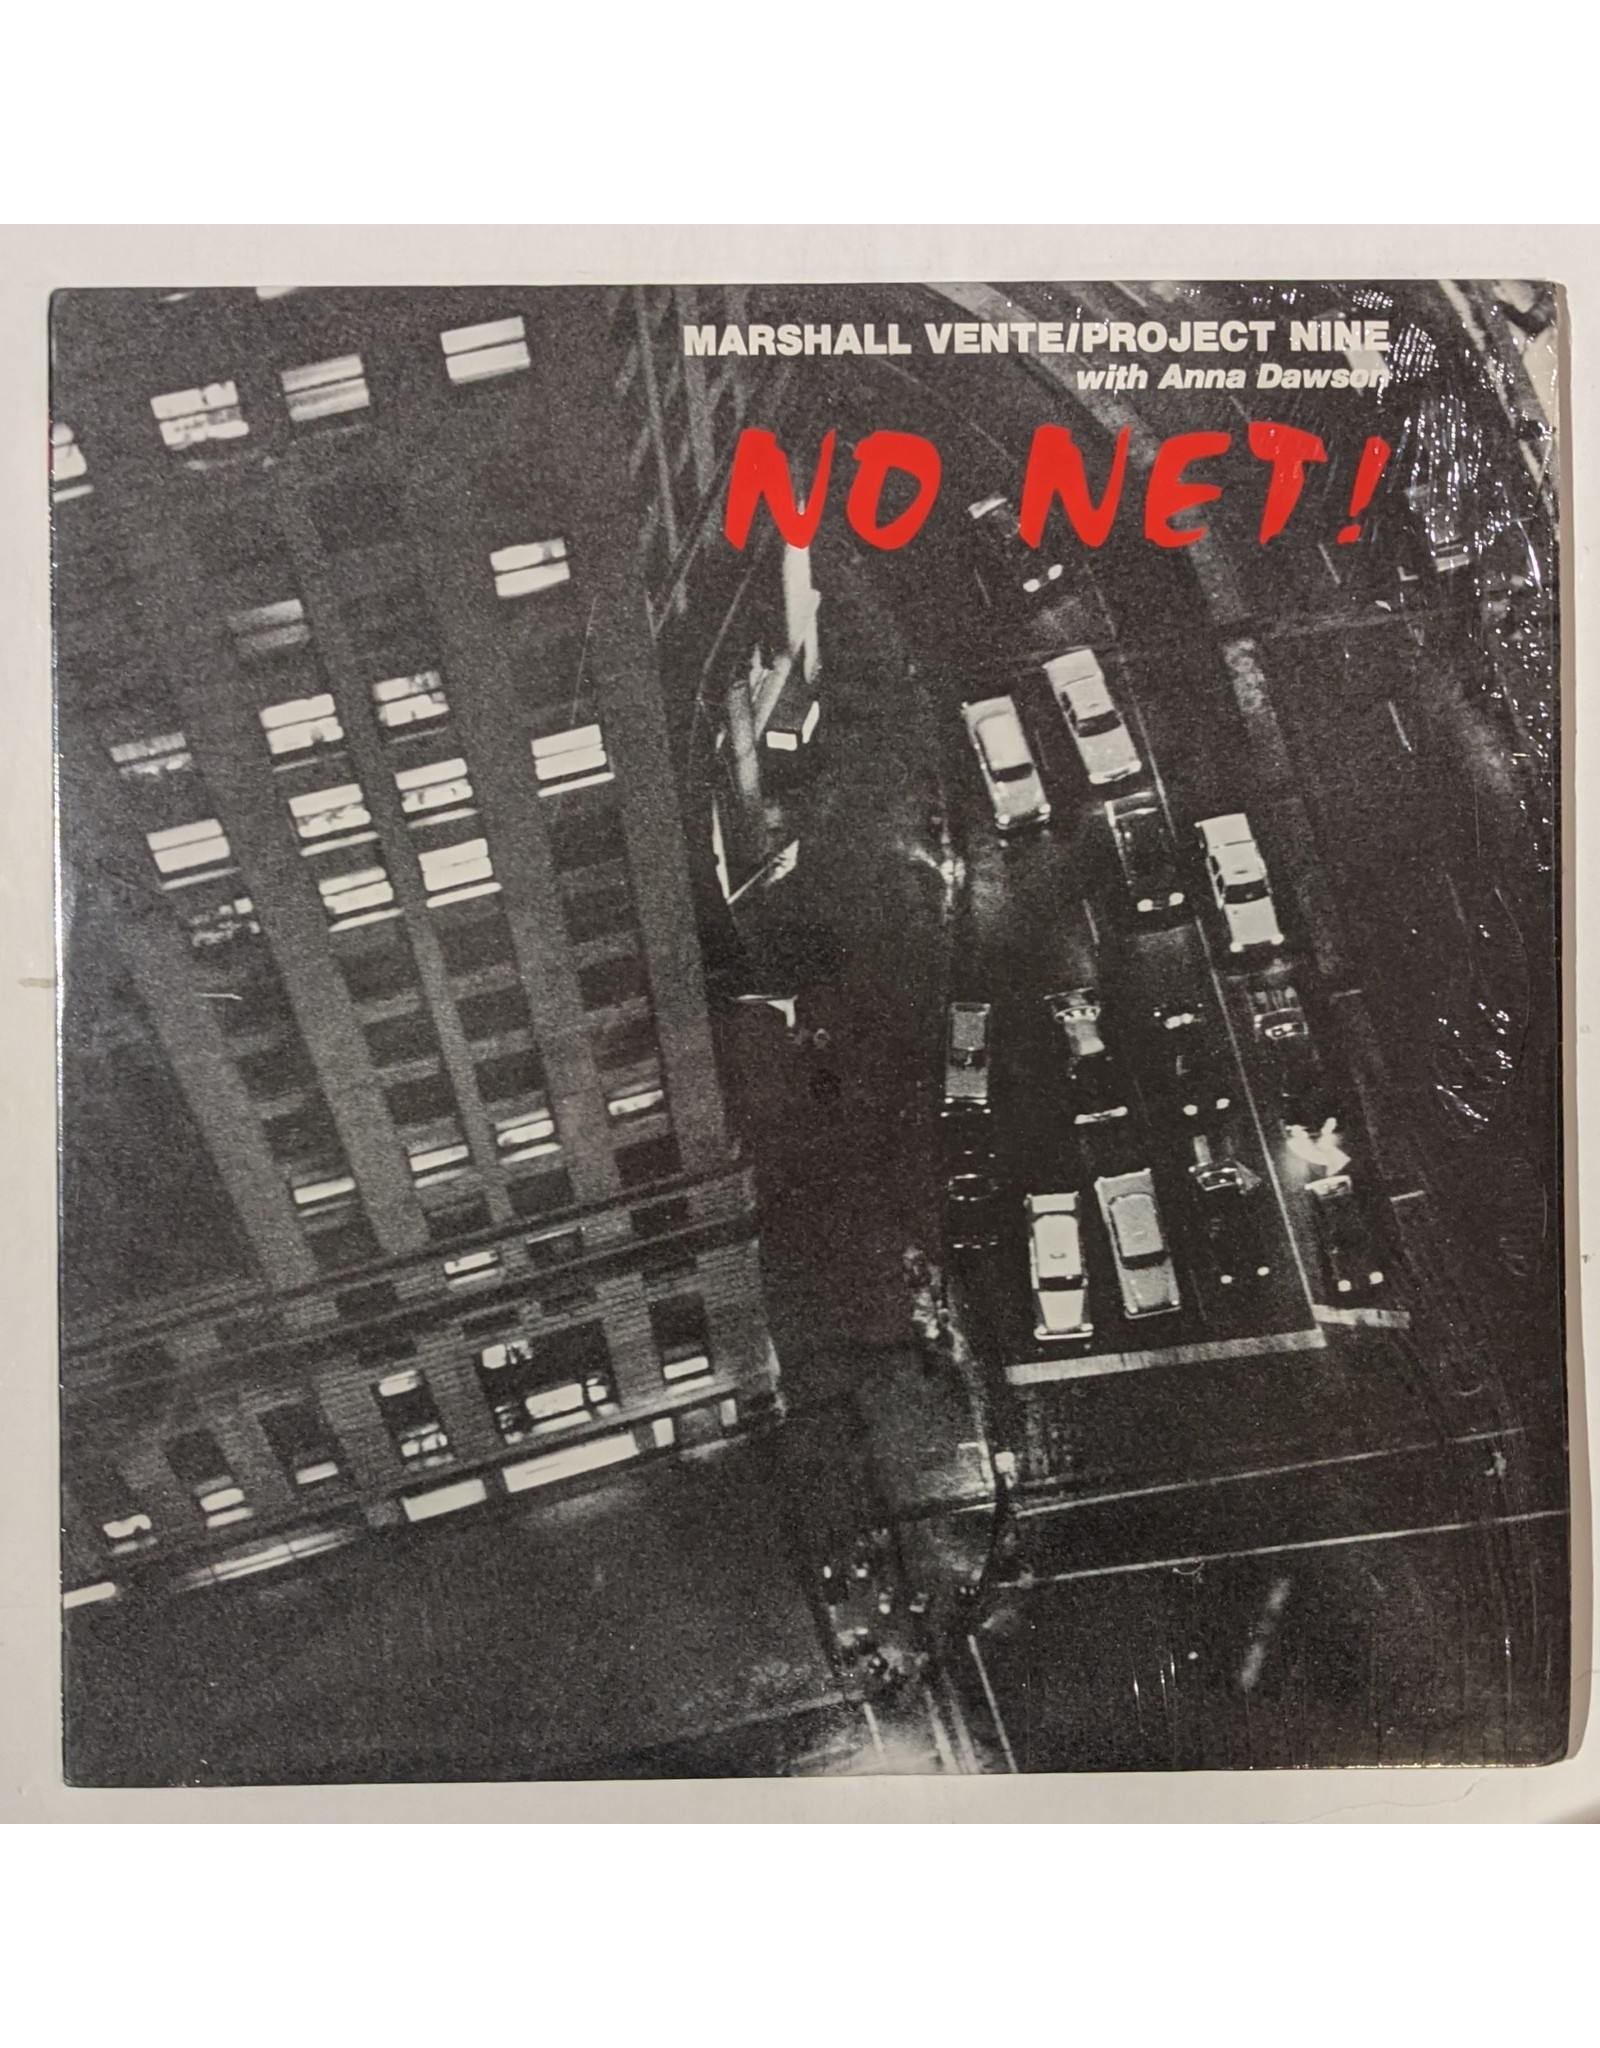 USED: Marshall Vente/Project Nine: No Net LP